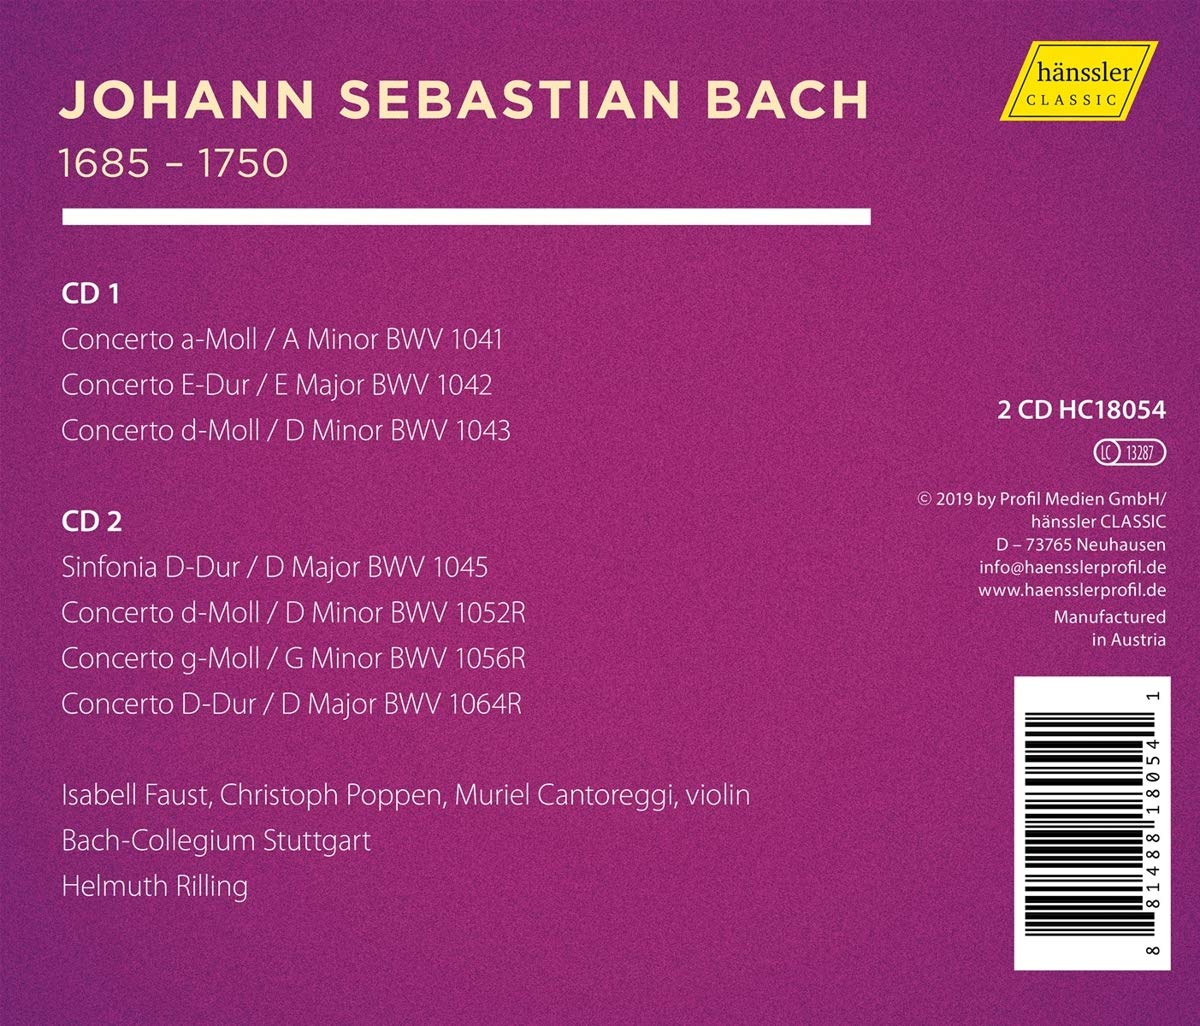 Isabelle Faust / Christoph Poppen 바흐: 바이올린 협주곡집 (Bach: Violin Concertos)